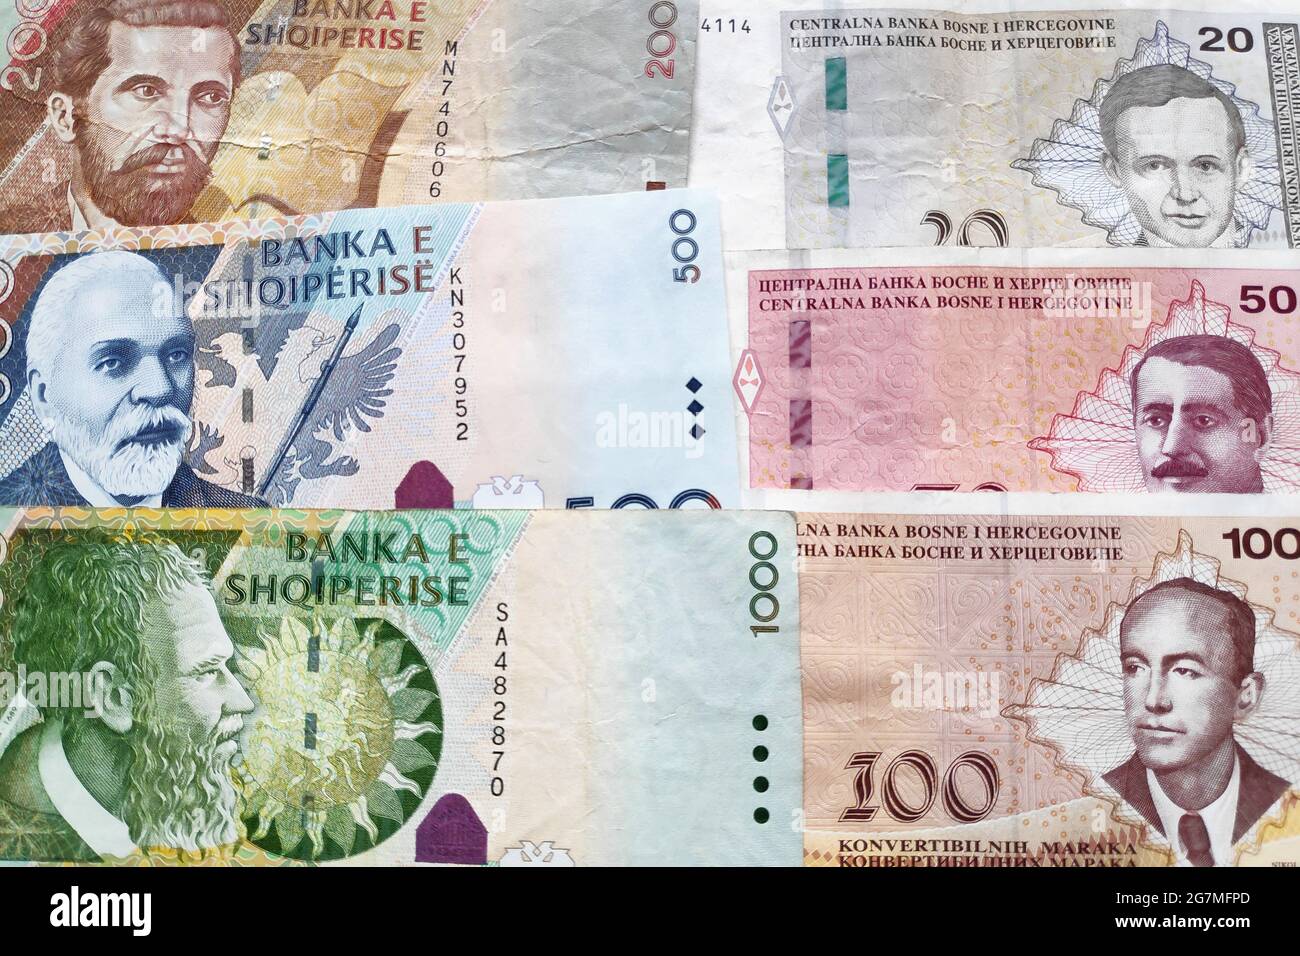 Босния и герцеговина валюта. Конвертируемая марка Боснии и Герцеговины. Валюта Боснии и Герцеговины. Валюта Албании. Босния и Герцеговина валюта фото.